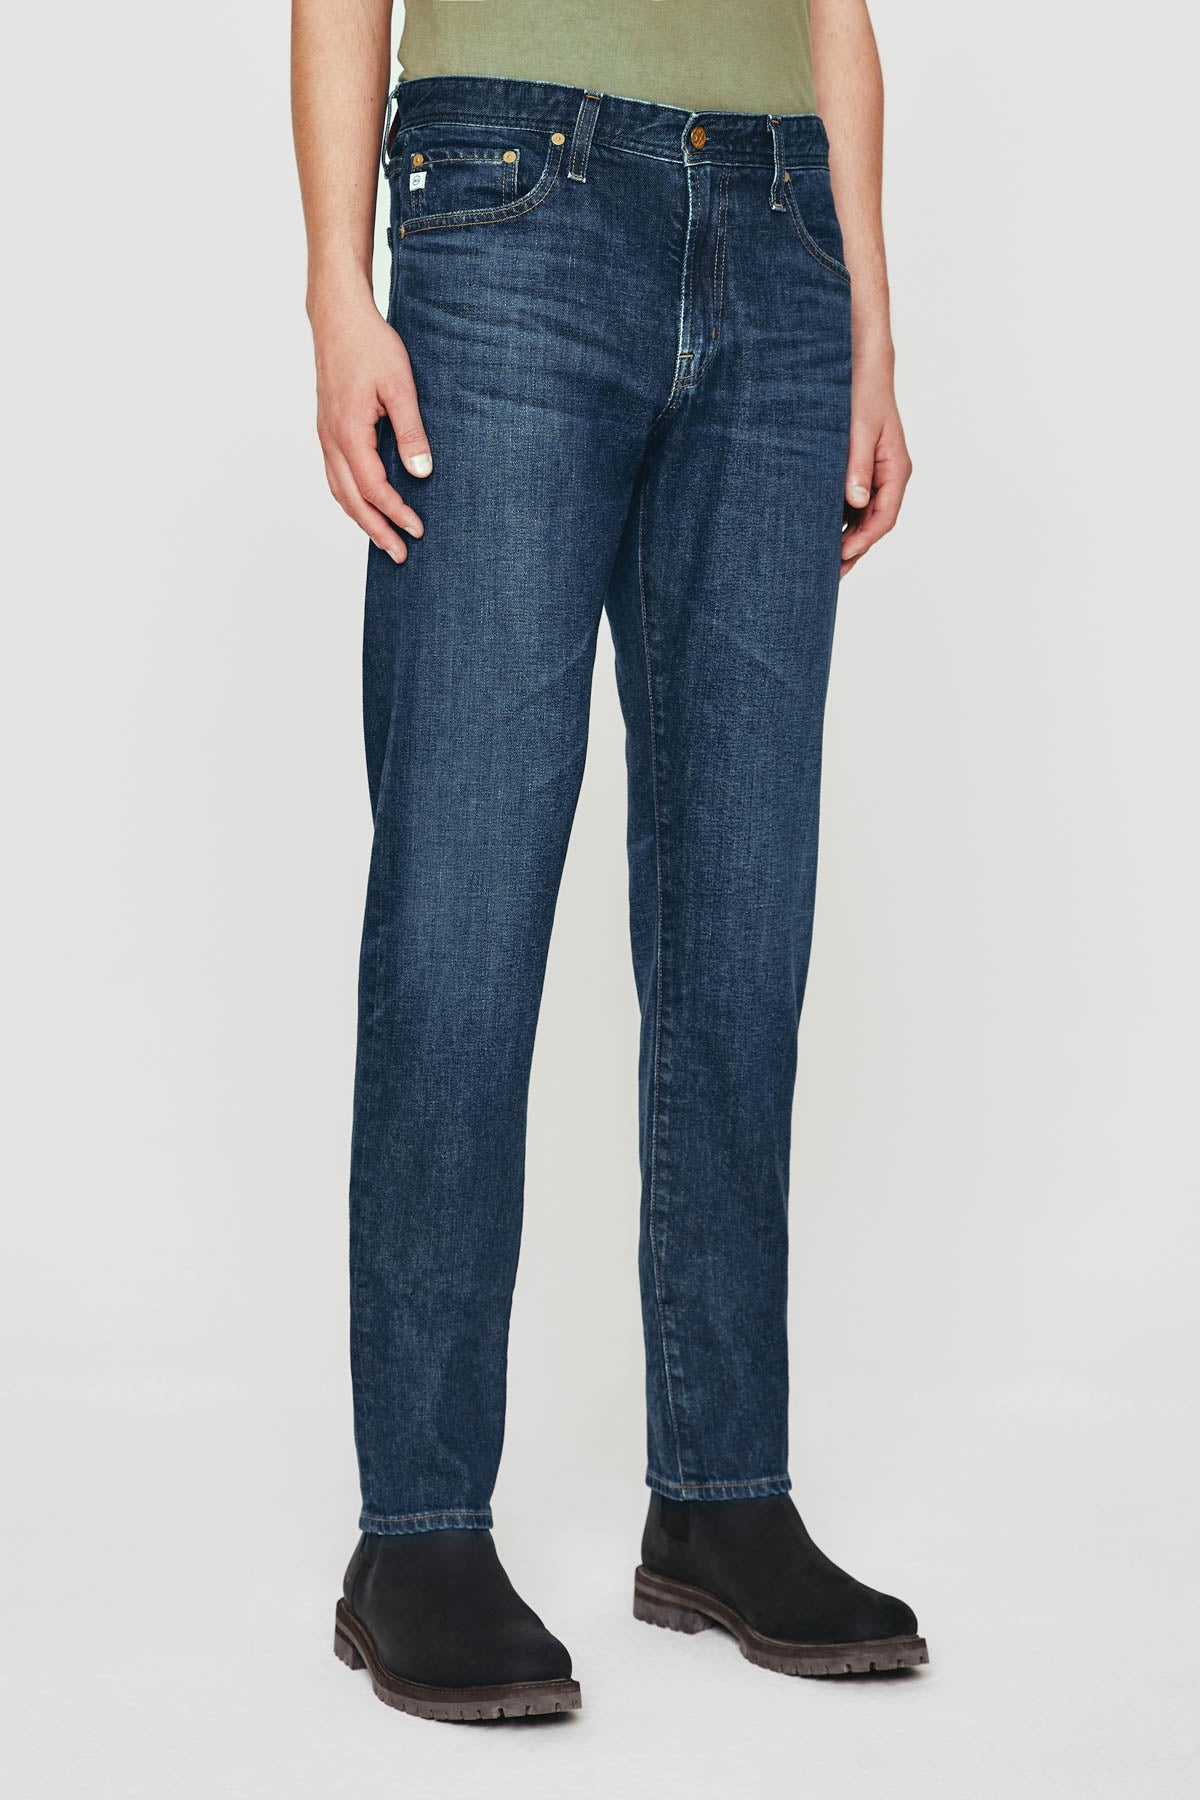 Tellis Modern Slim Jean - AG Jeans - Danali - 1783DAS-05YVIS-30